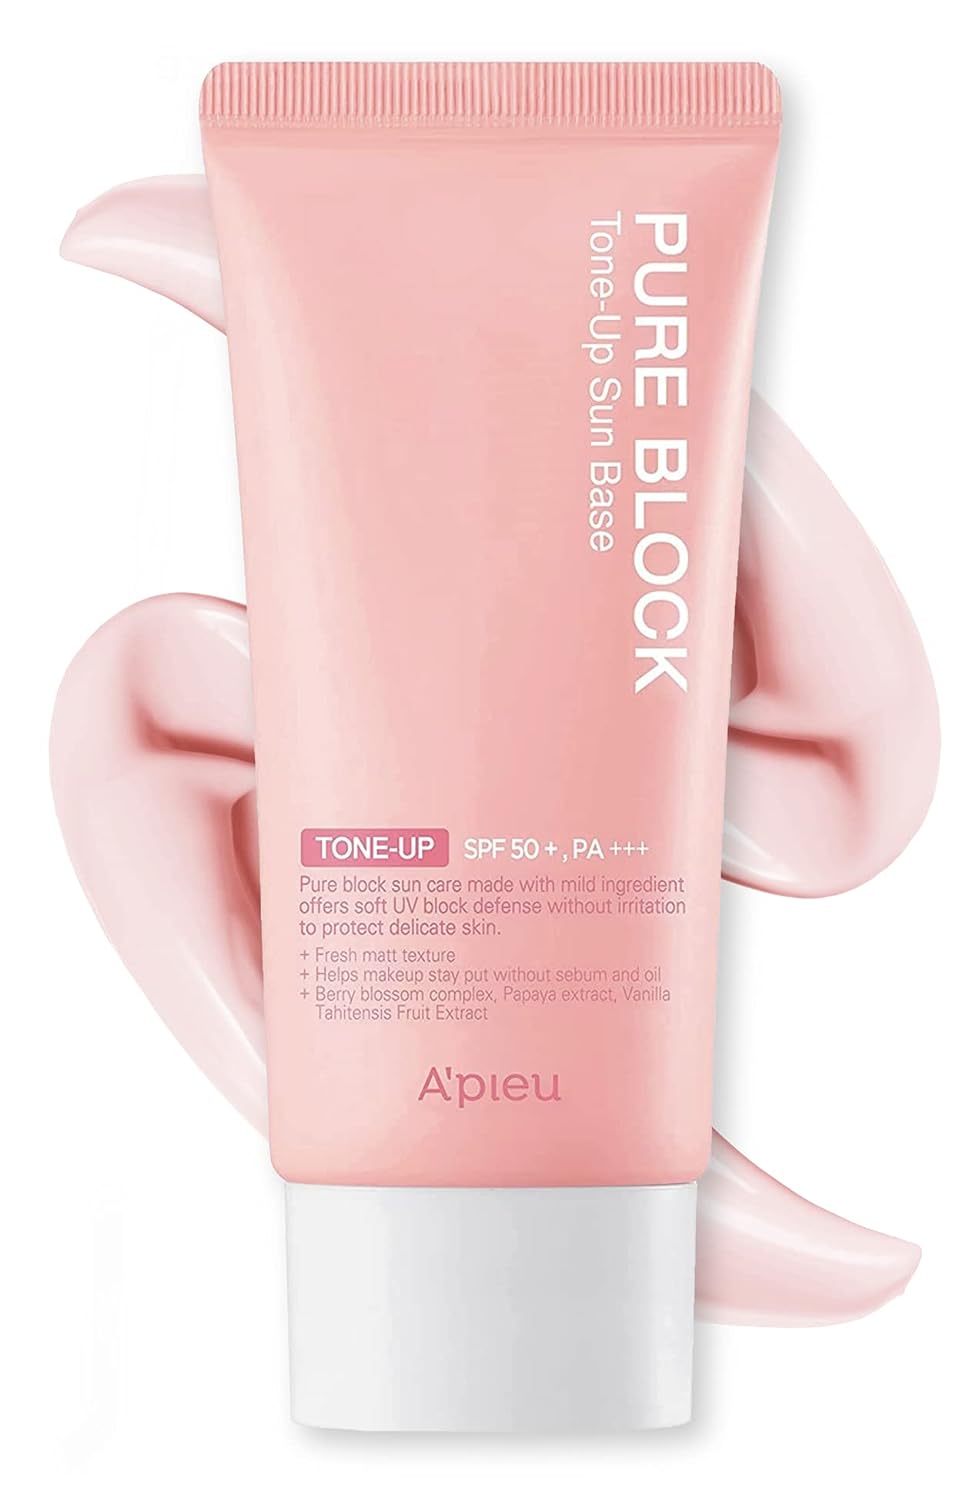 A'PIEU Pure Block Tone Up Sunscreen Base SPF50+/PA+++ 50ml | Tone-Up Reef Safe Korean Sunscreen for Makeup Base